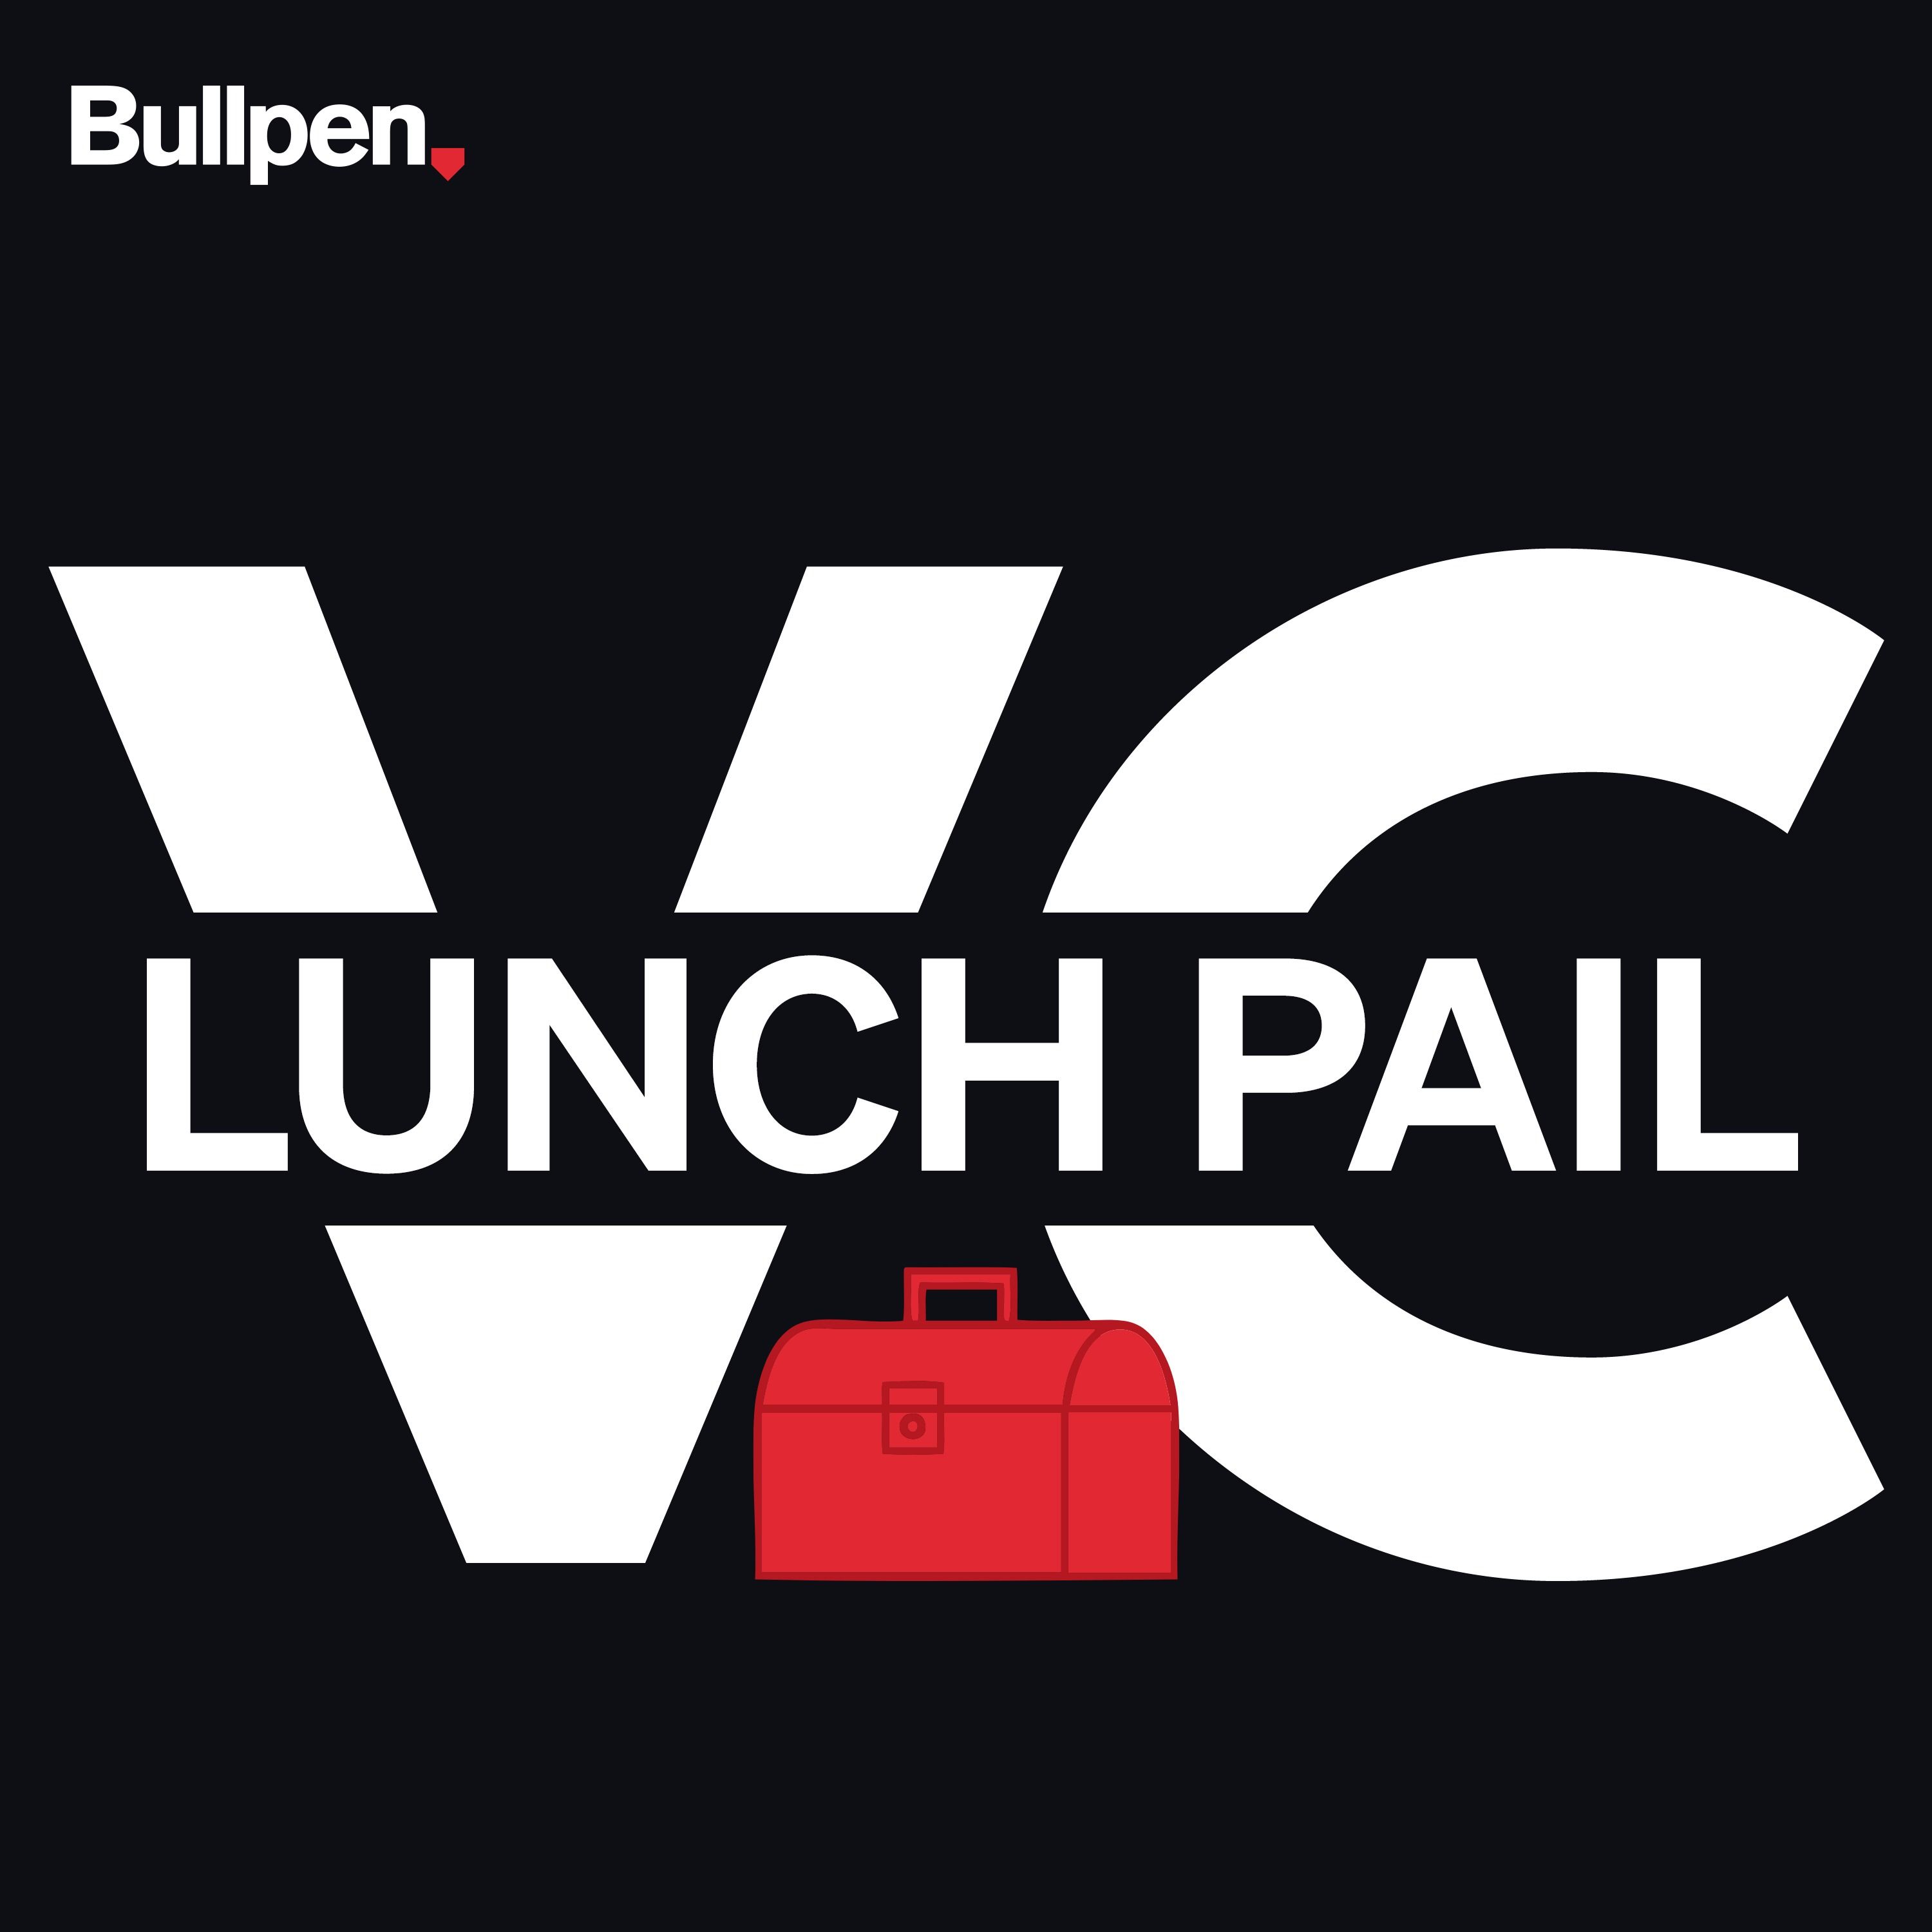 Lunch Pail VC